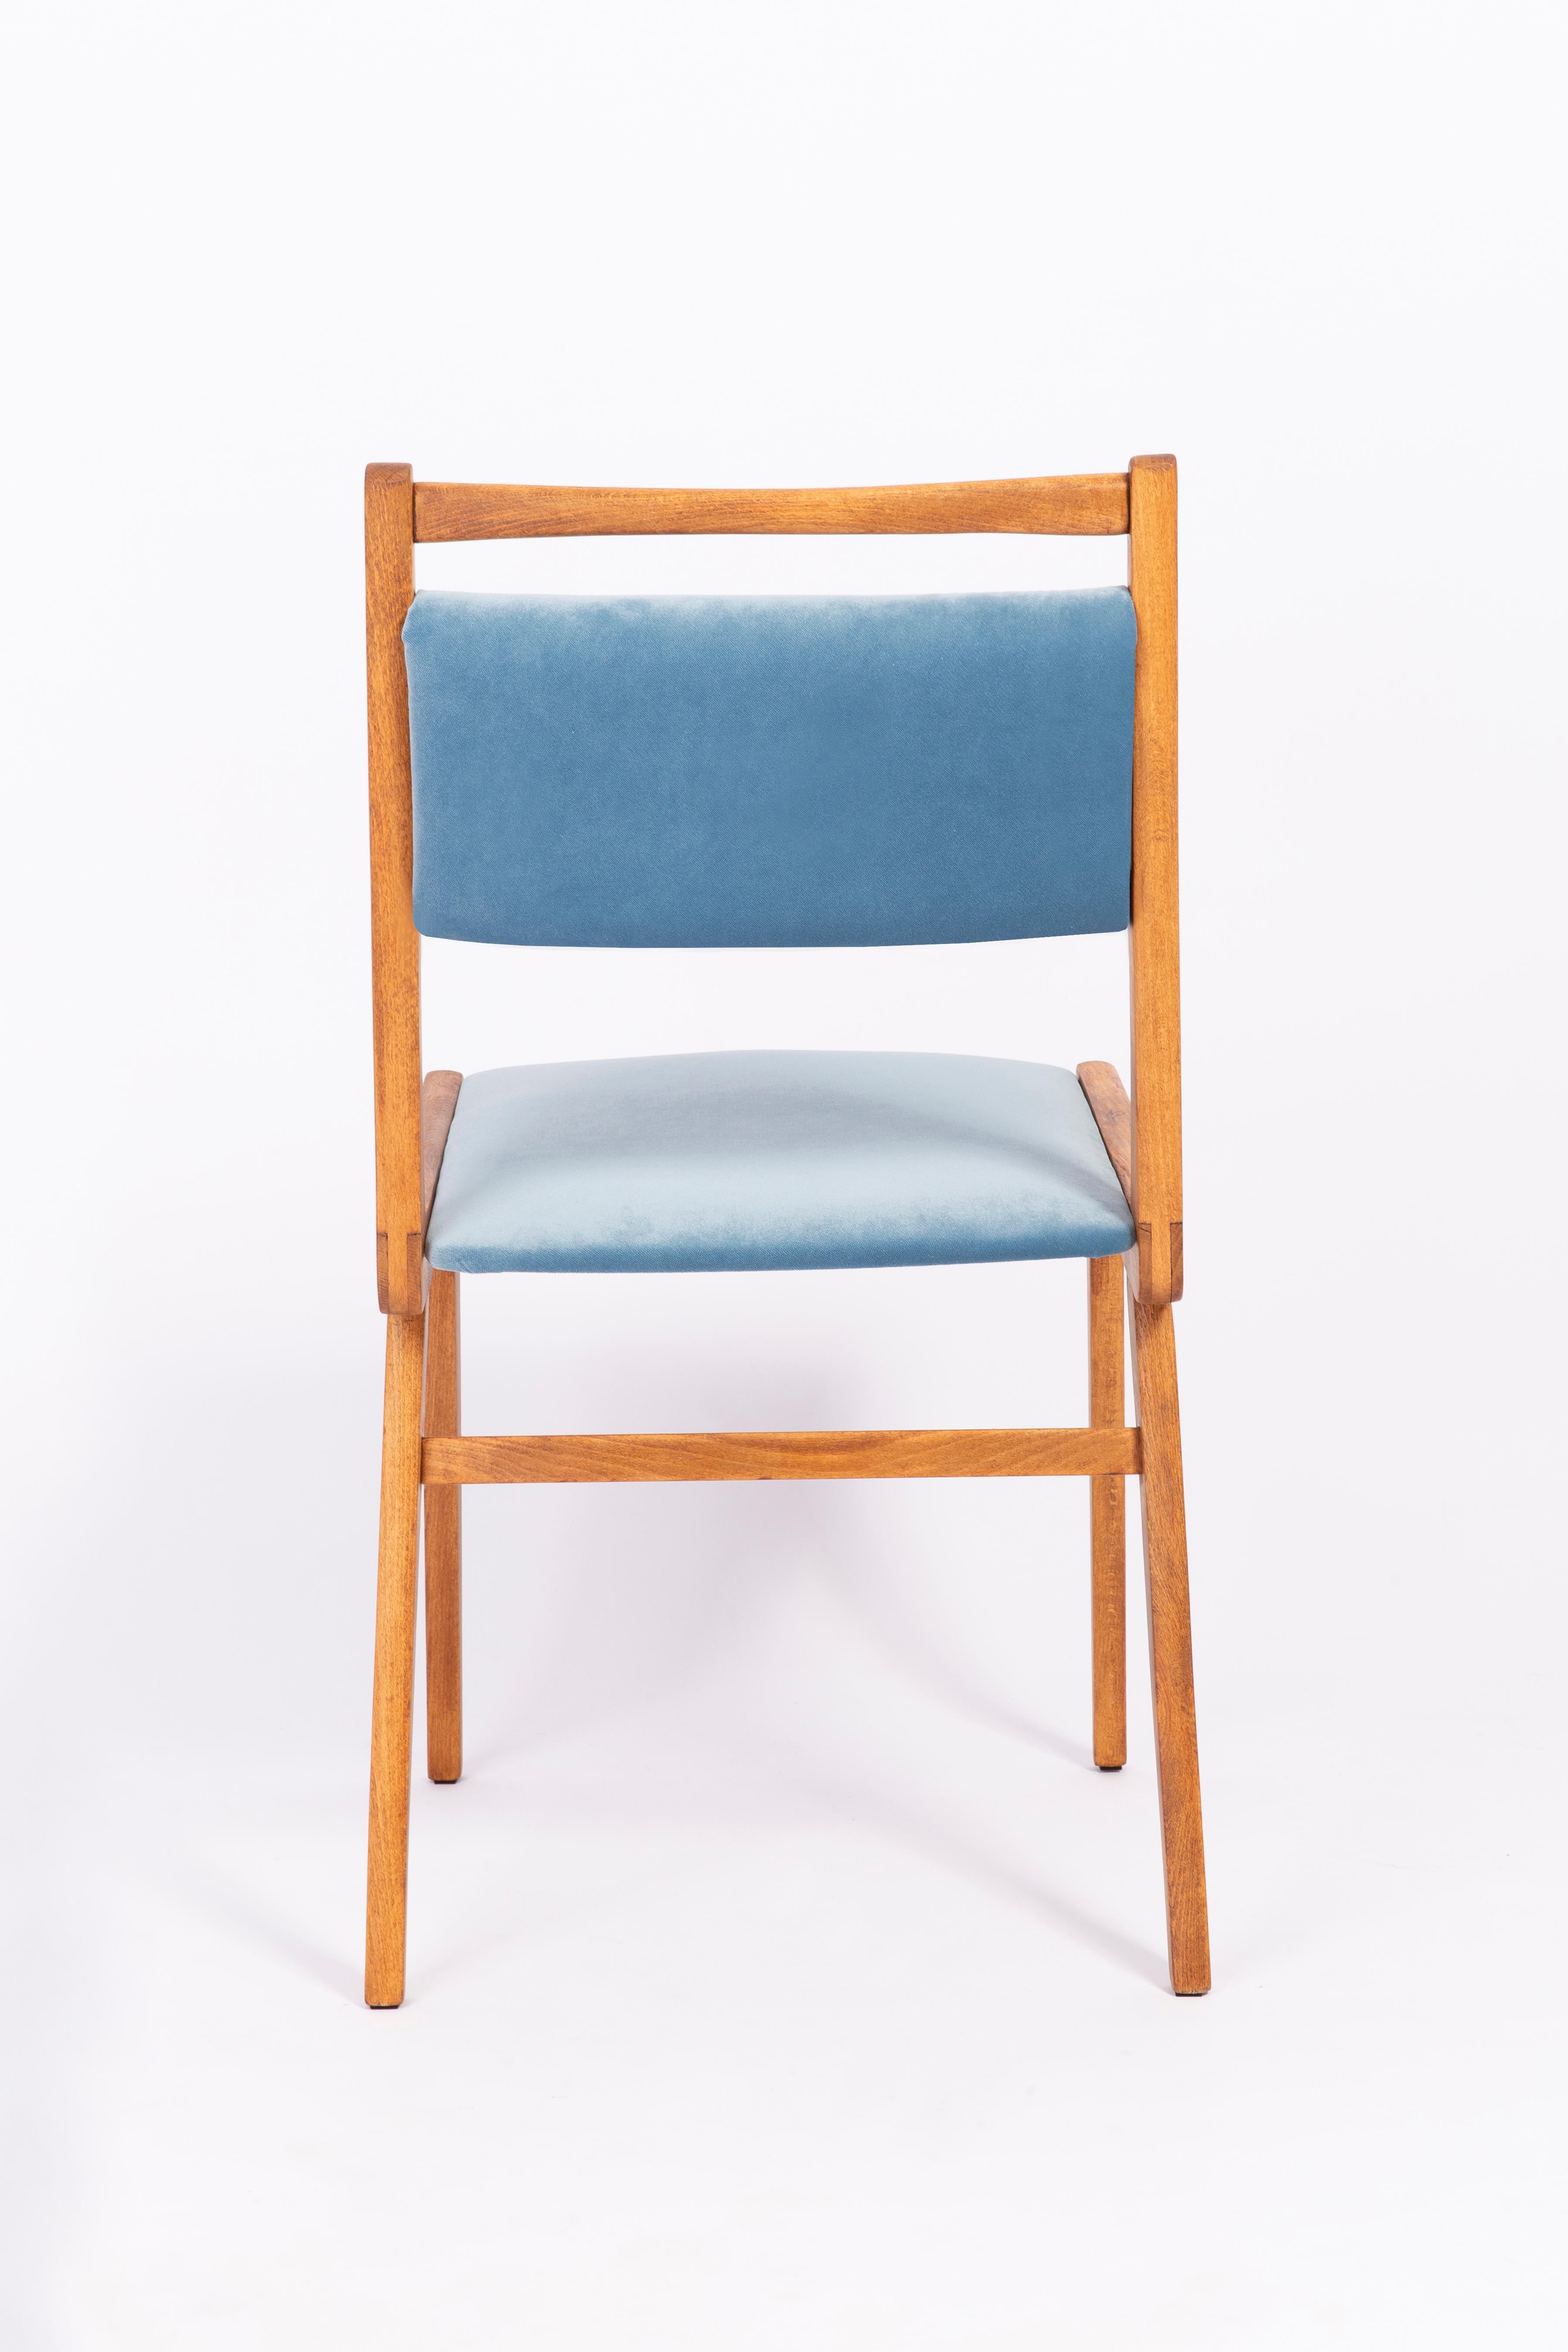 Set of Twelve 20th Century Blue Velvet Chairs, Poland, 1960s For Sale 3